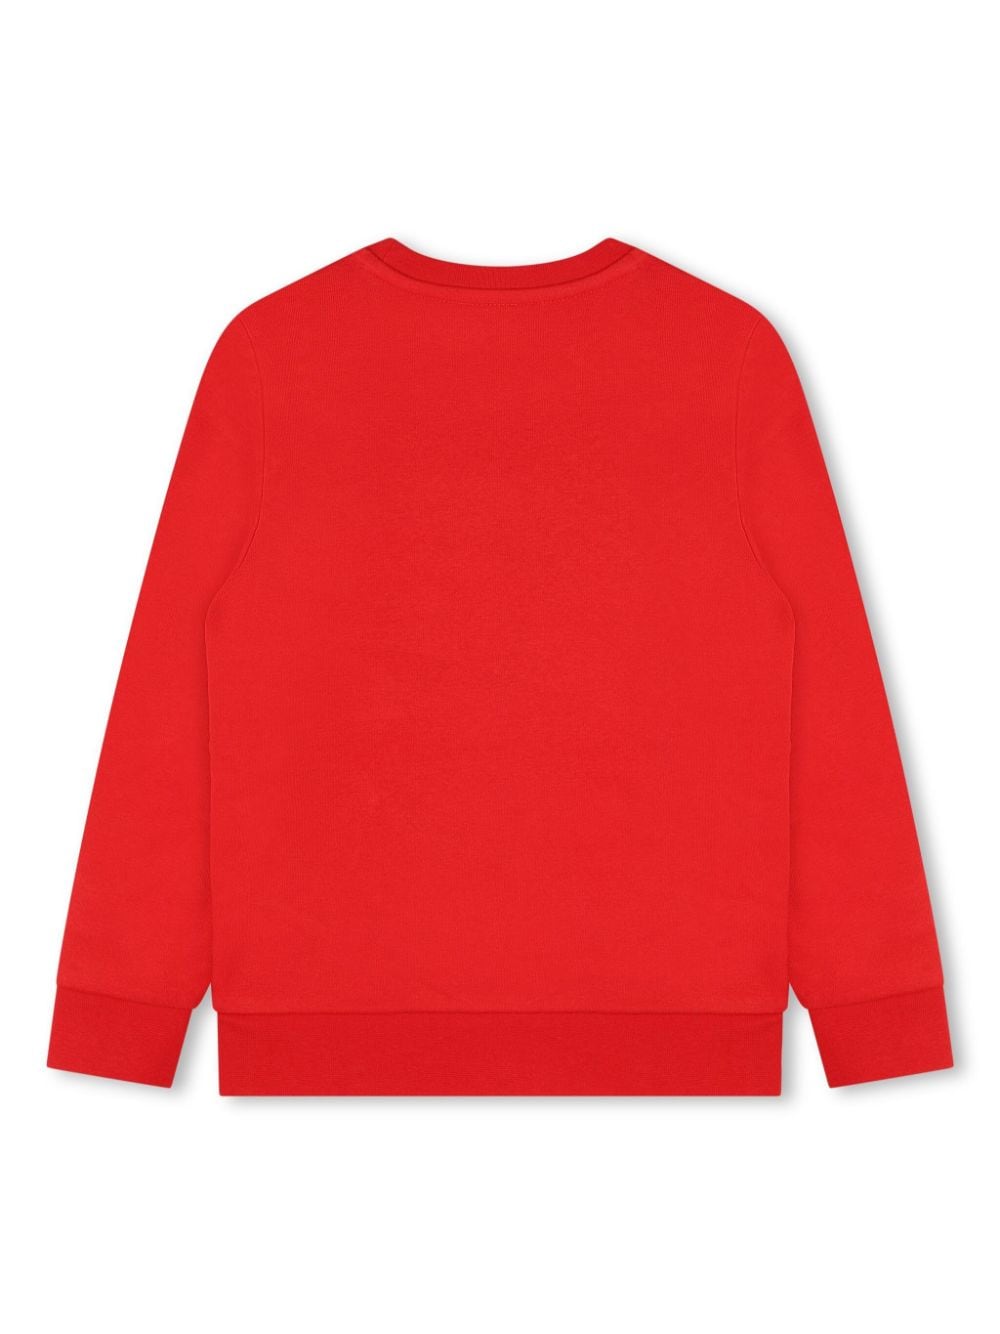 Red cotton blend boy HUGO BOSS sweatshirt | Carofiglio Junior